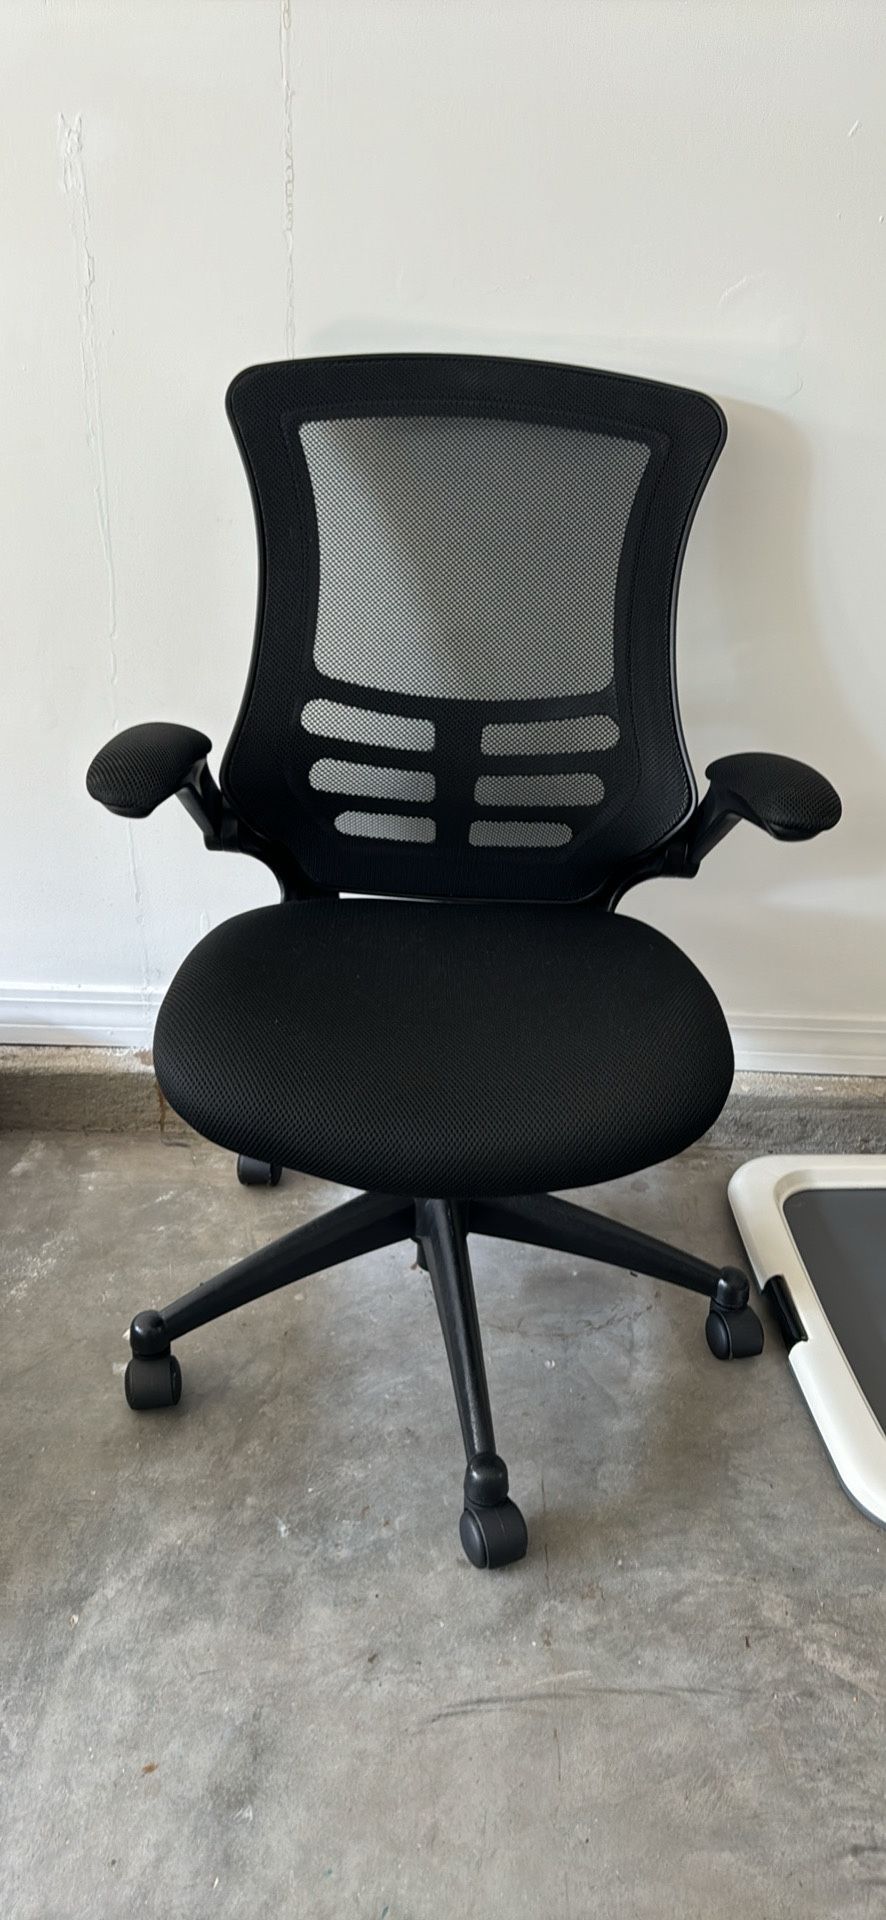 Swivel Desk Chair With Wheels